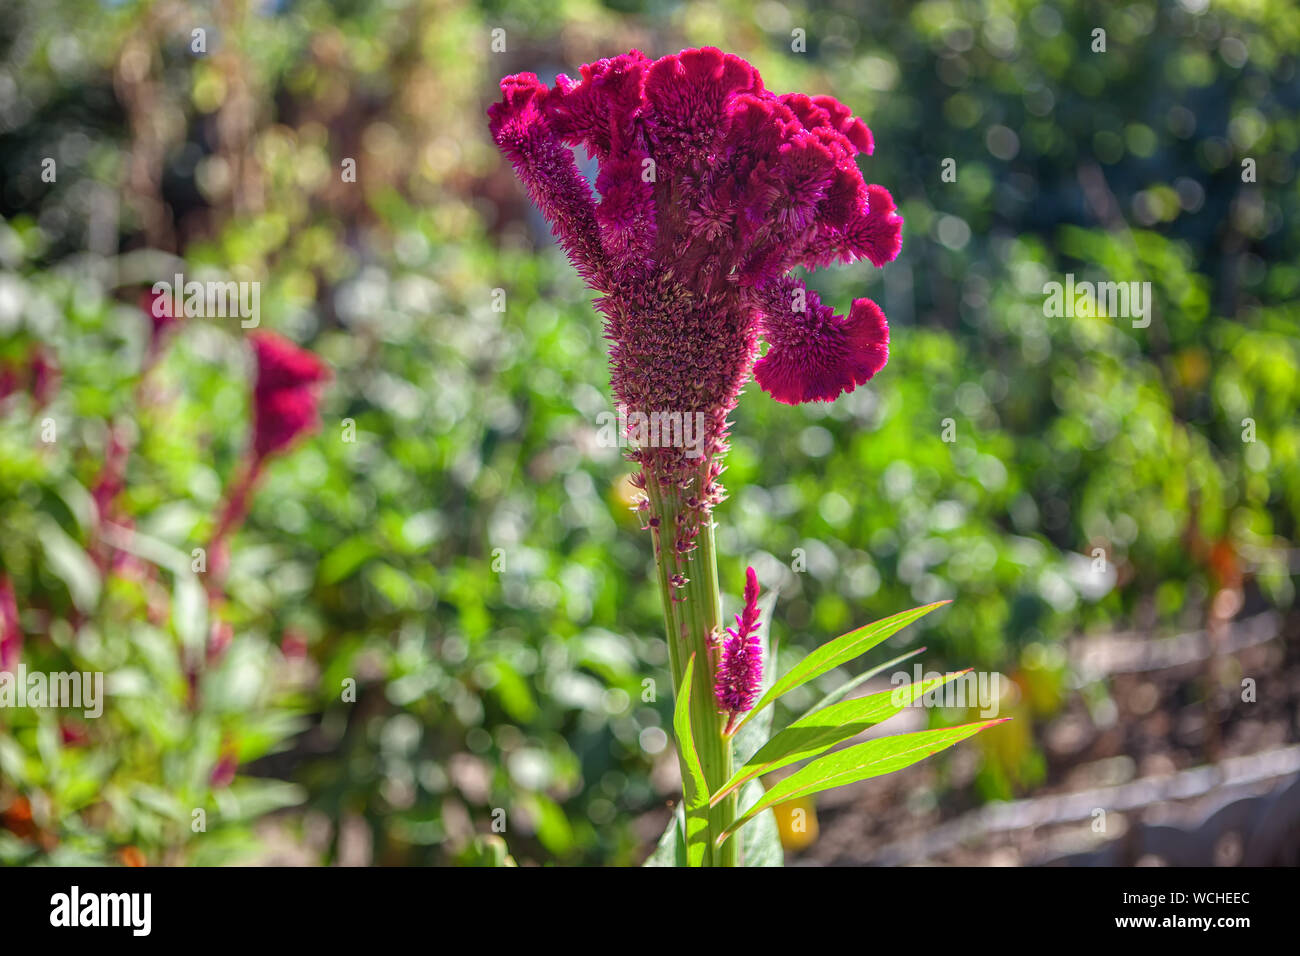 Celosia Cristata Red Flower In The Garden Stock Photo Alamy